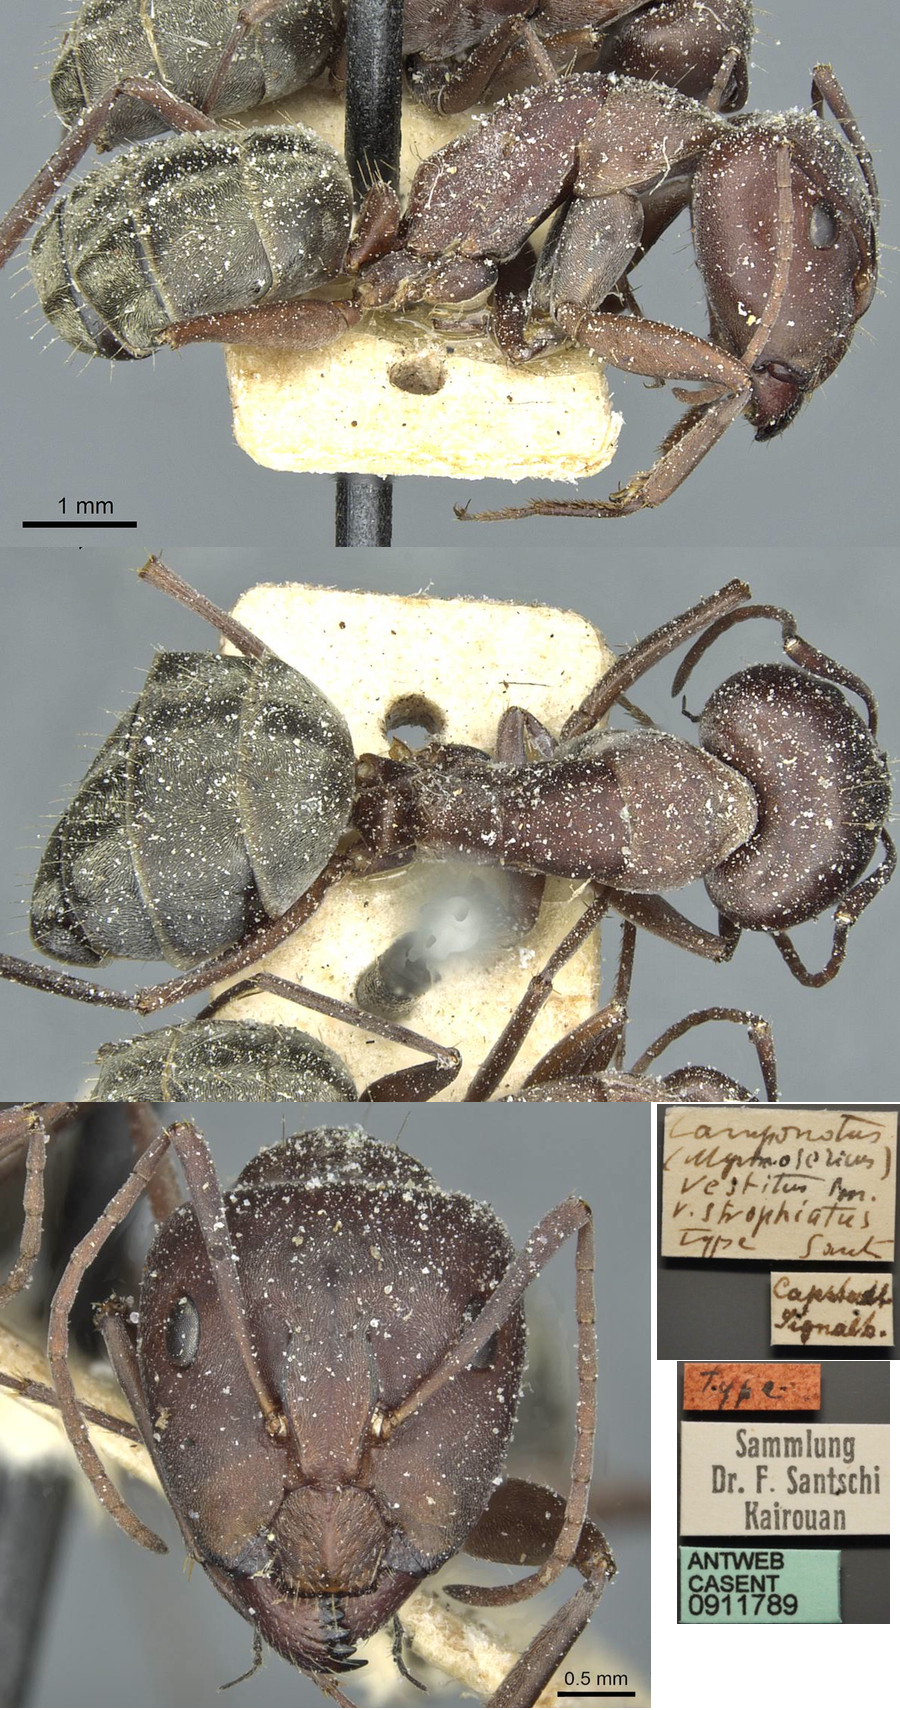 {Camponotus vestitus strophiatus major}